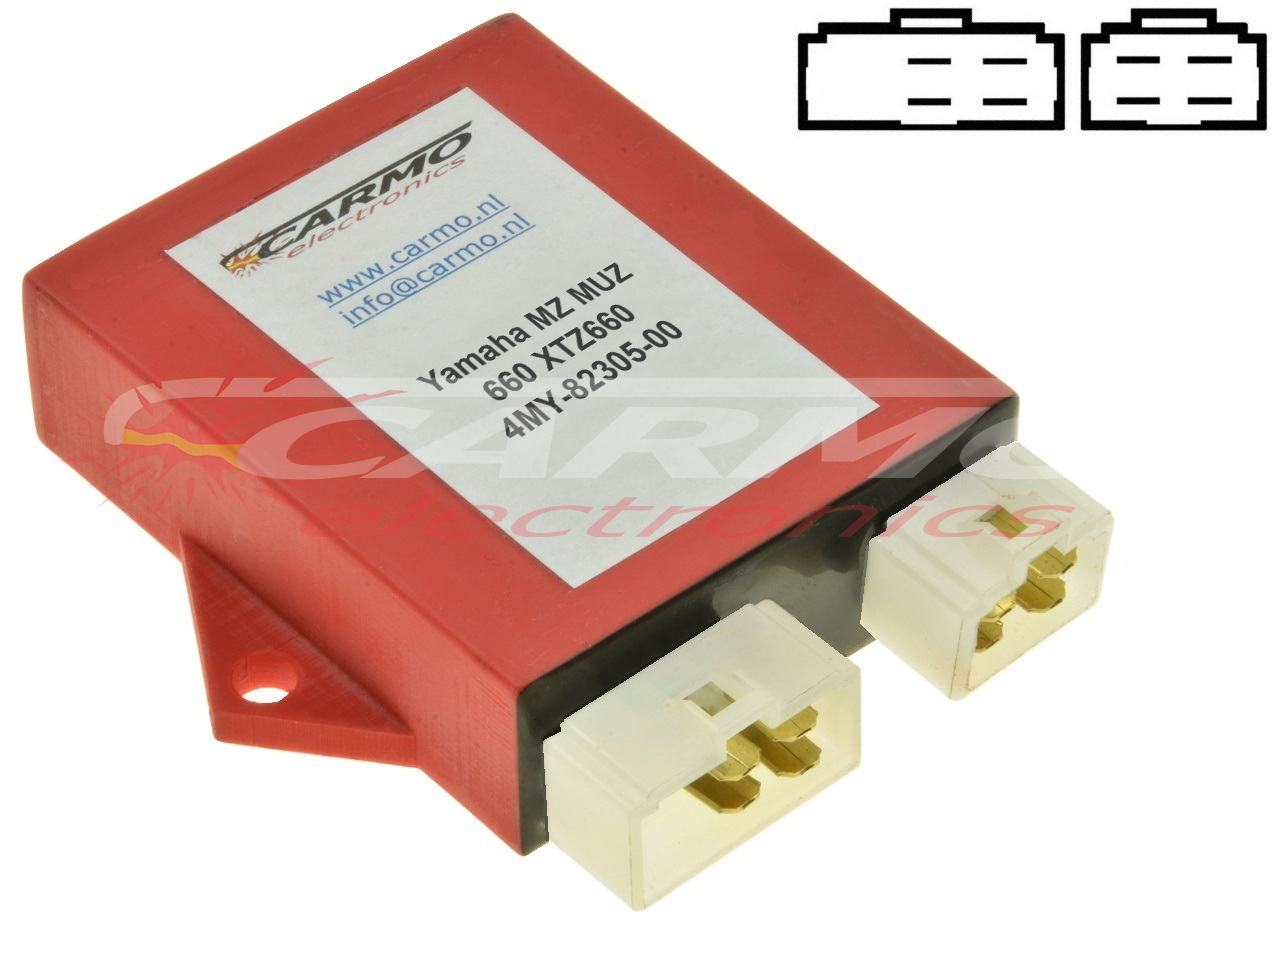 Yamaha MZ MUZ 660 XTZ660 Ténéré igniter ignition module CDI TCI Box (4MY-82305-00, 131800-6150) - Clique na Imagem para Fechar